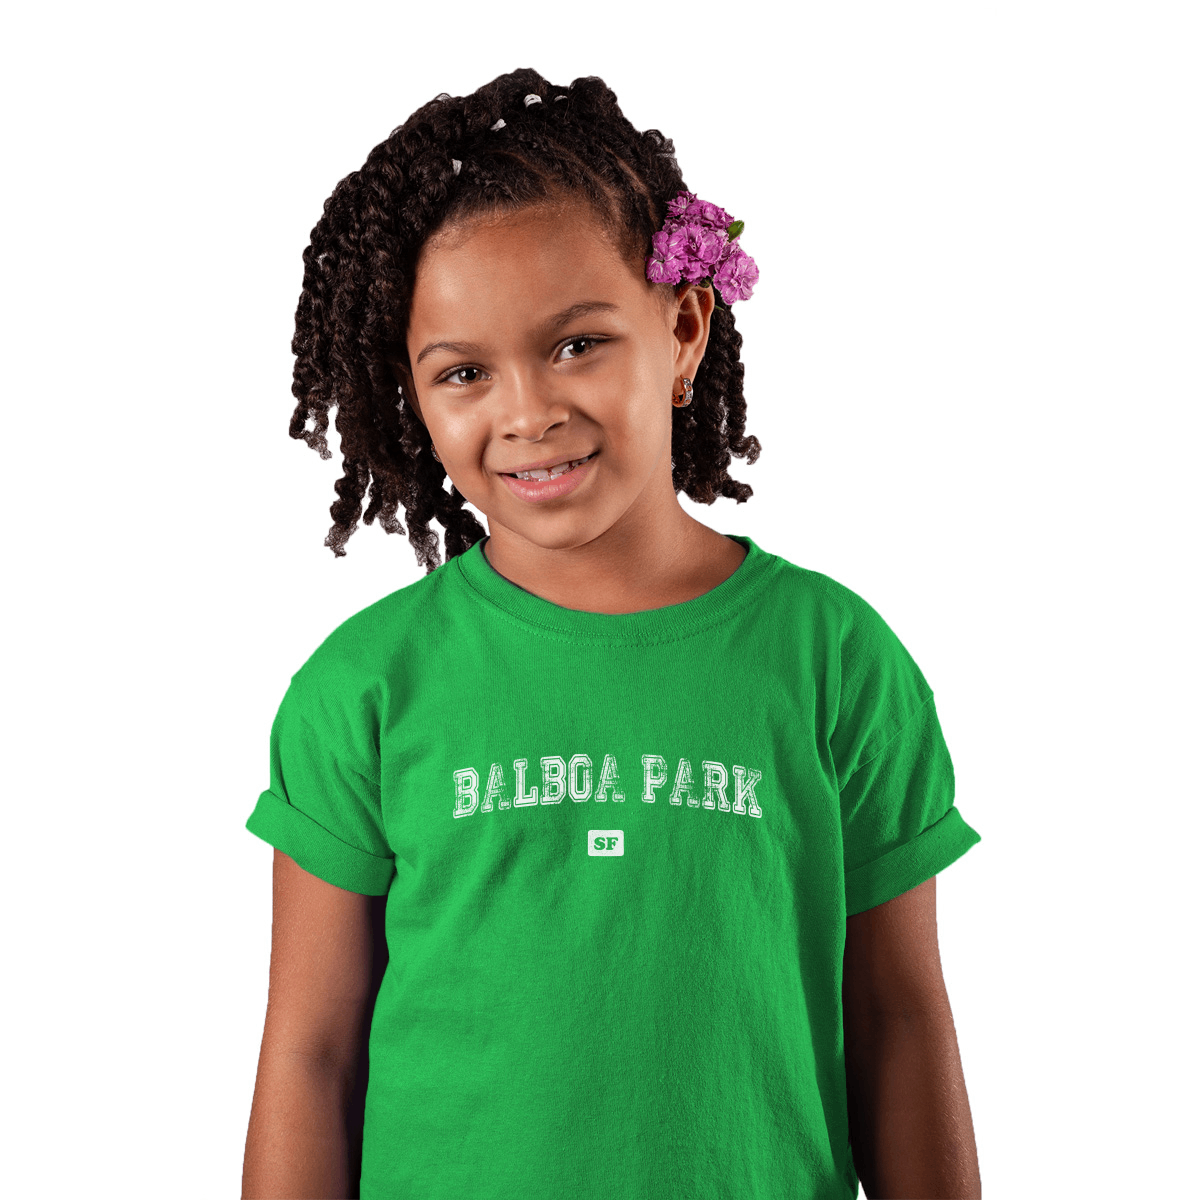 Balboa Park Sf Represent Toddler T-shirt | Green